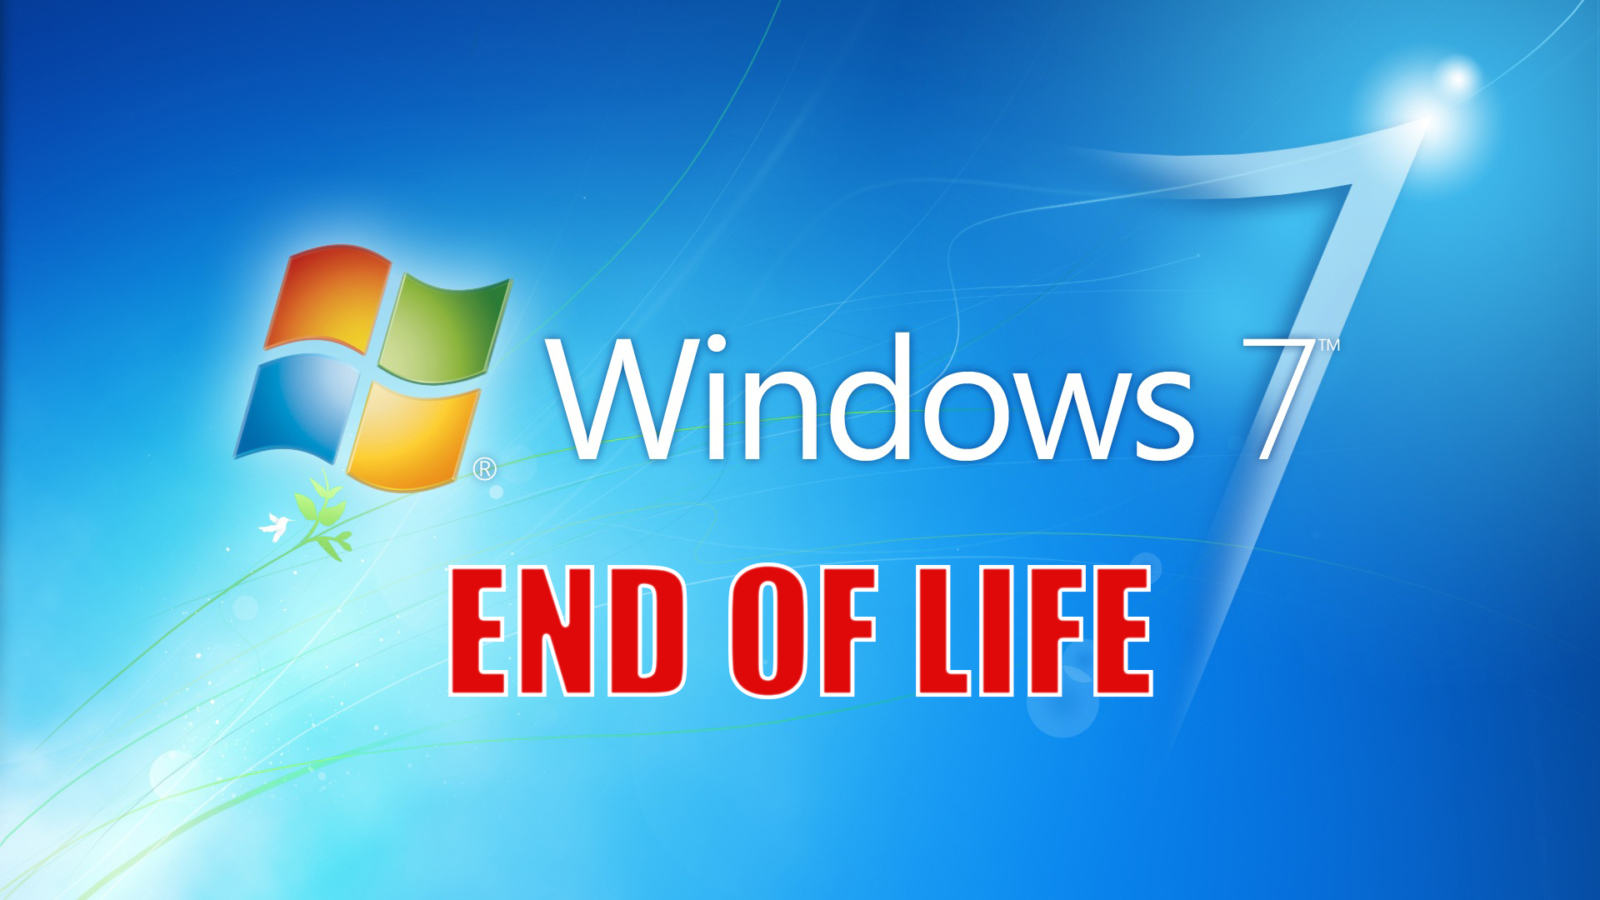 Windows 7 EndOfLife 1stcs.it